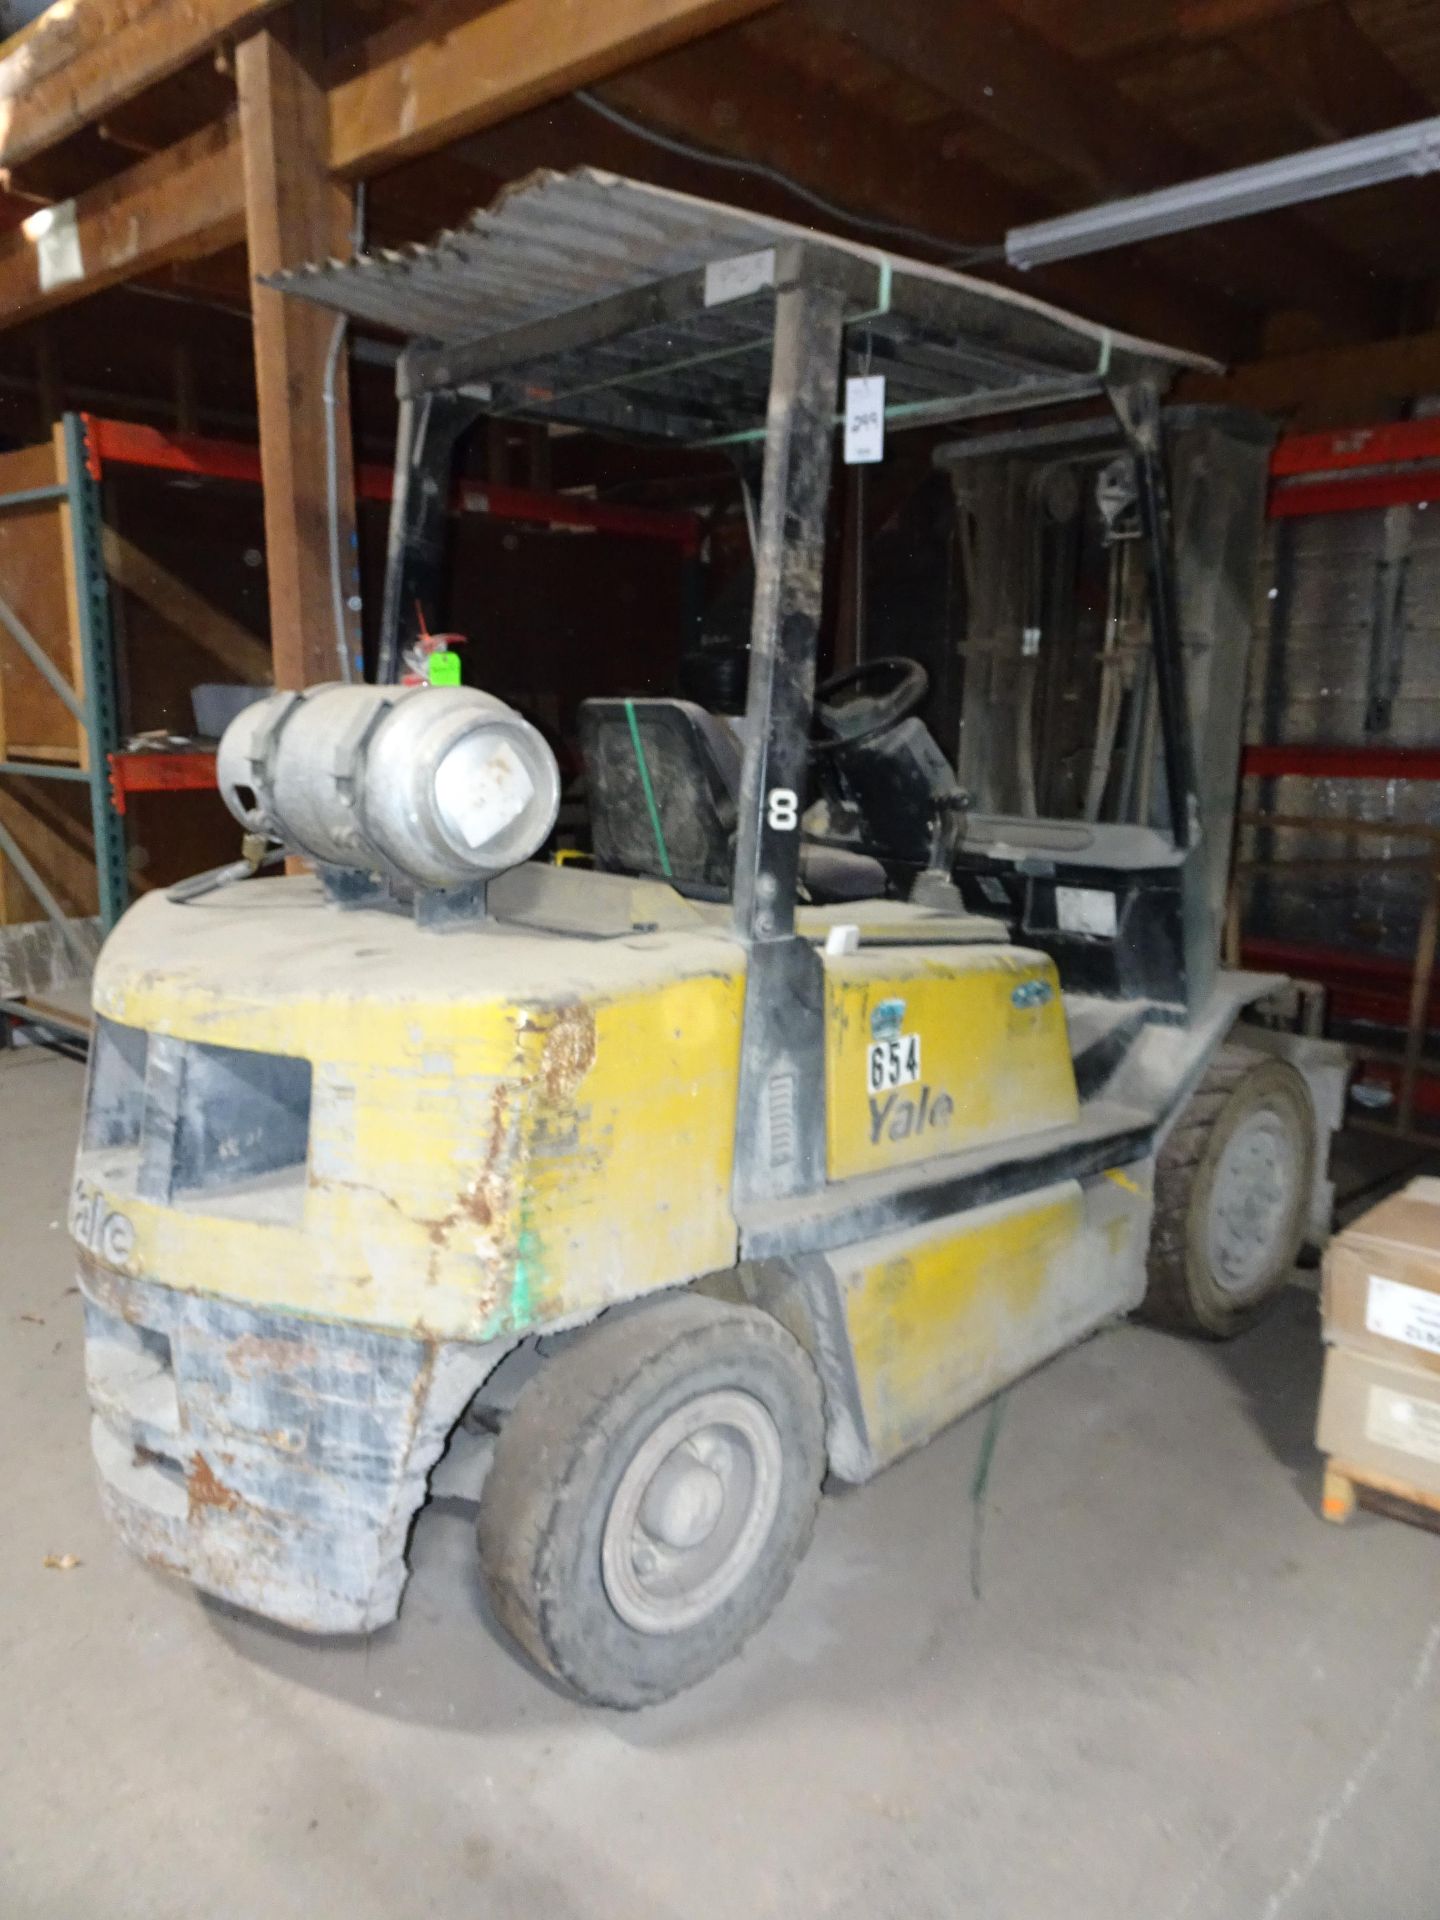 Yale 8,000 lb Capacity LP Forklift